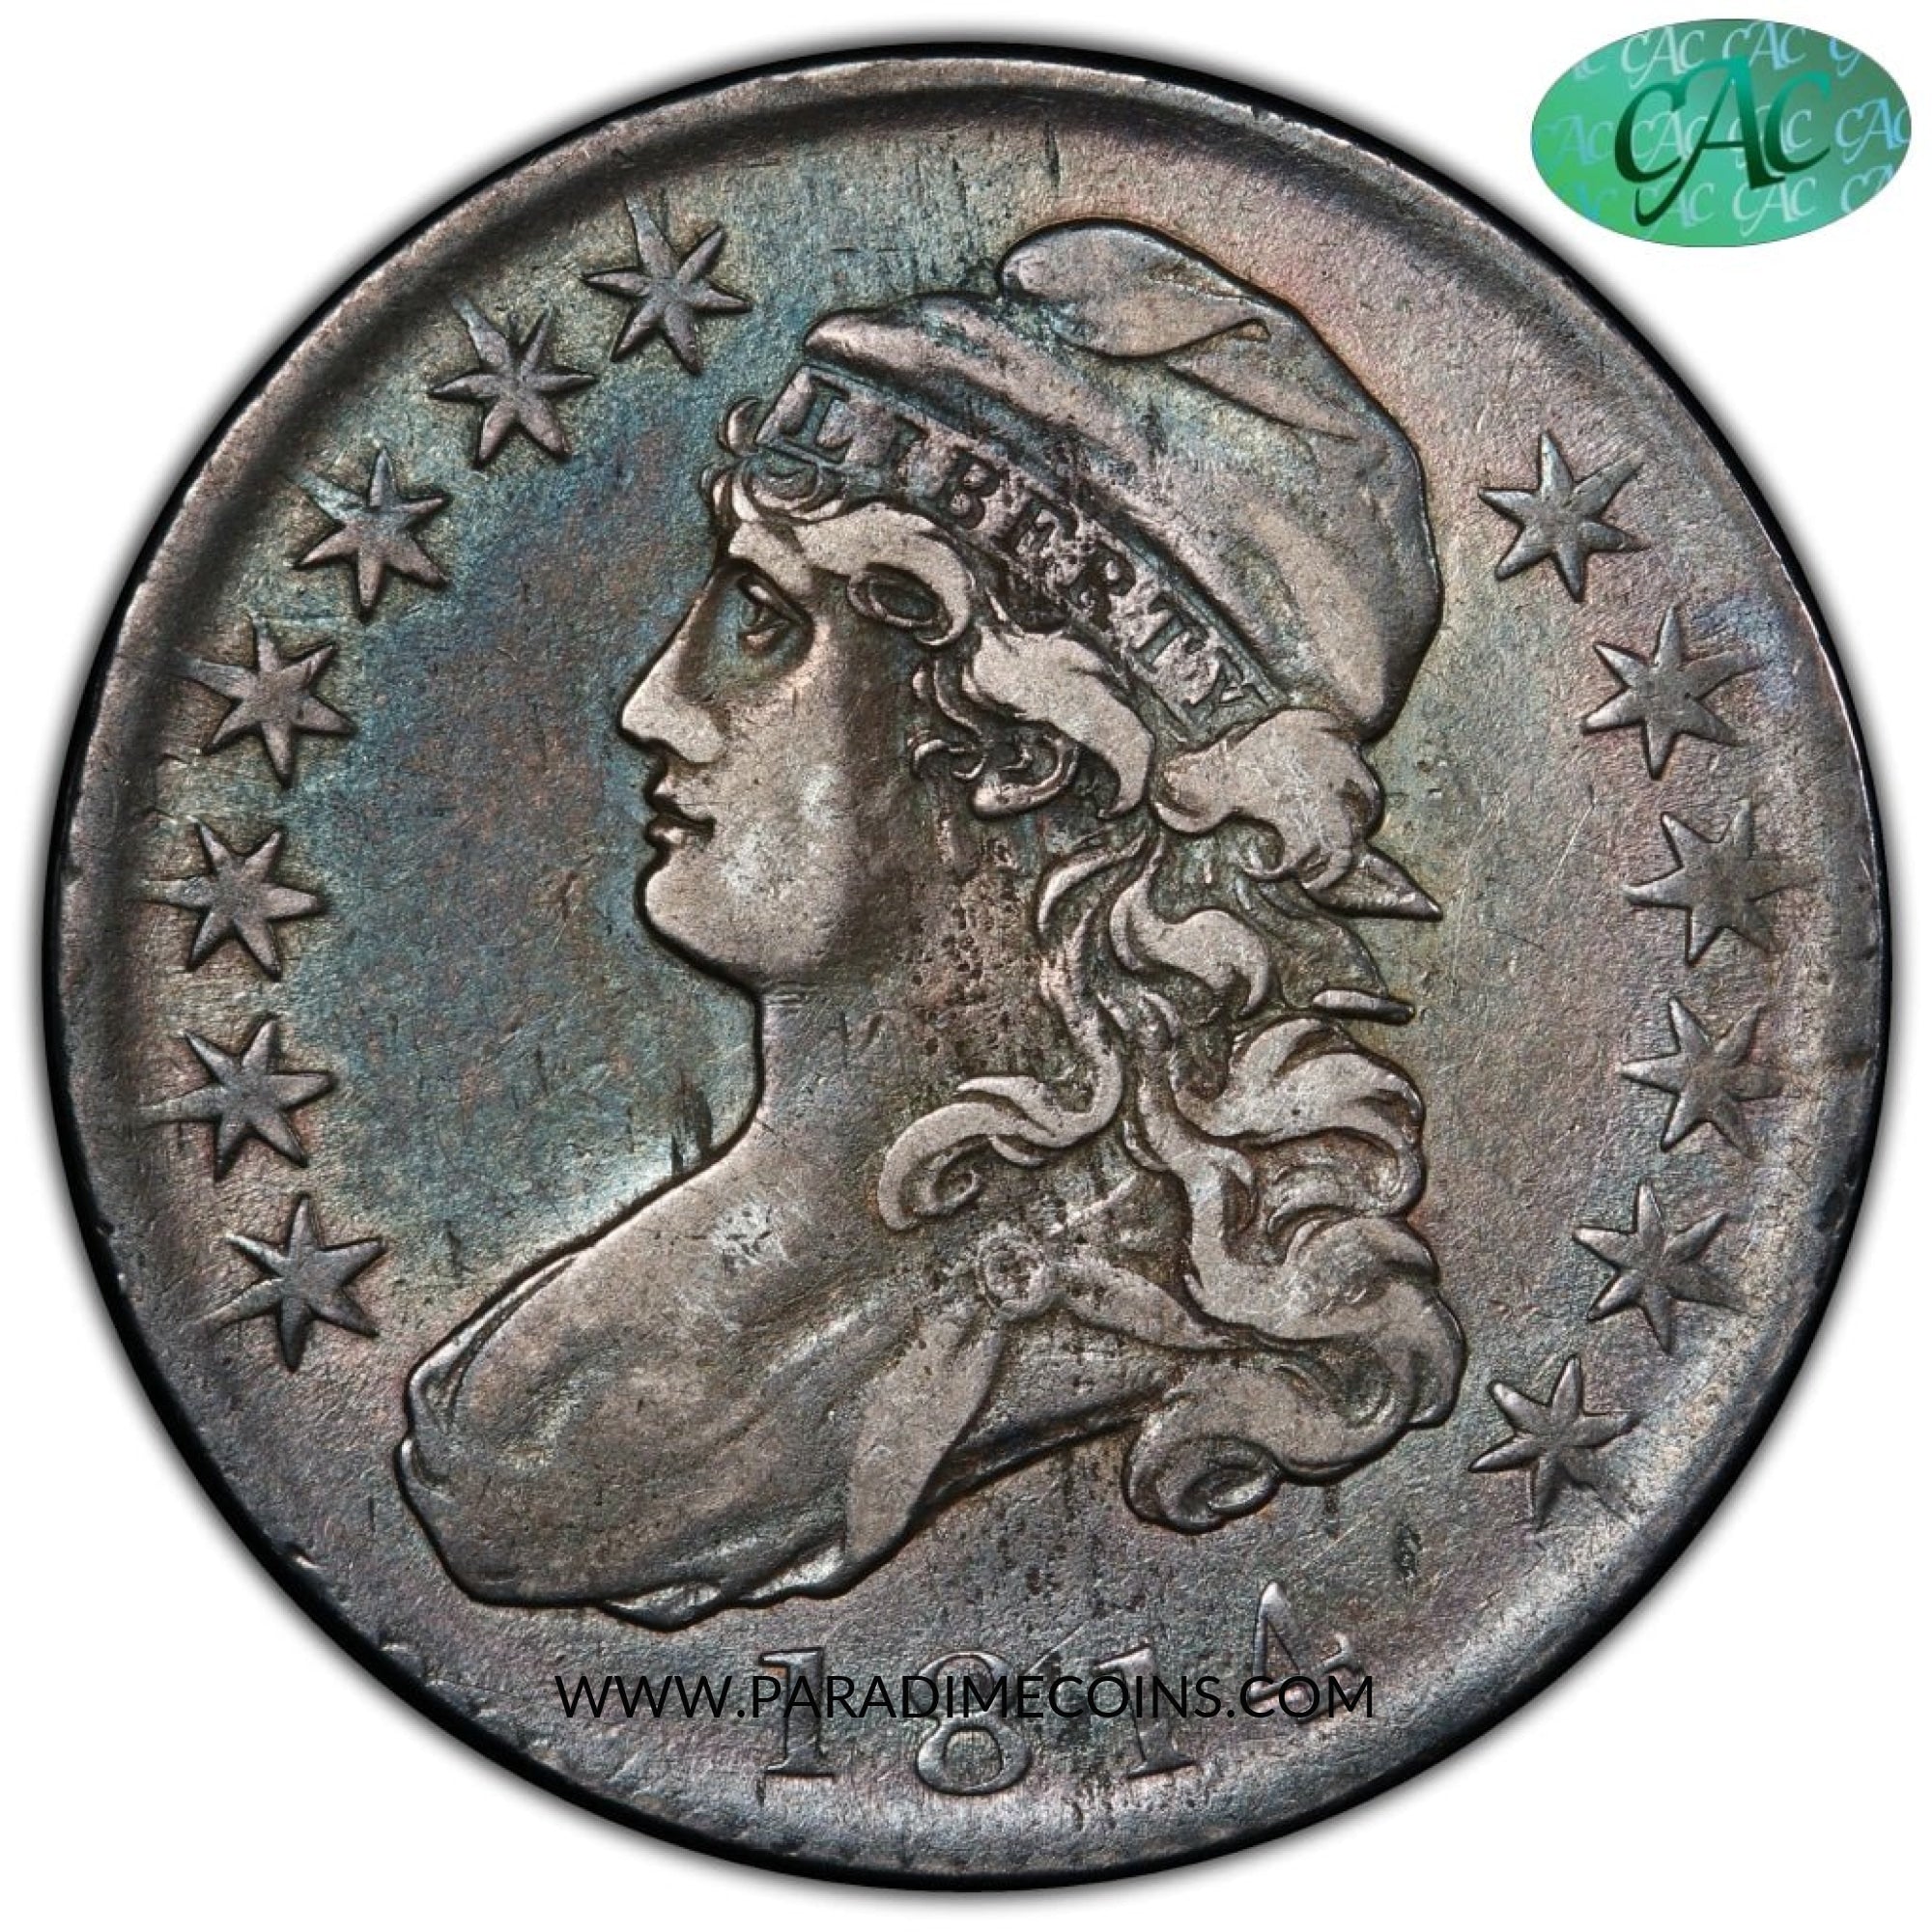 1814 50C O-105a SINGLE LEAF VF35 PCGS CAC - Paradime Coins | PCGS NGC CACG CAC Rare US Numismatic Coins For Sale